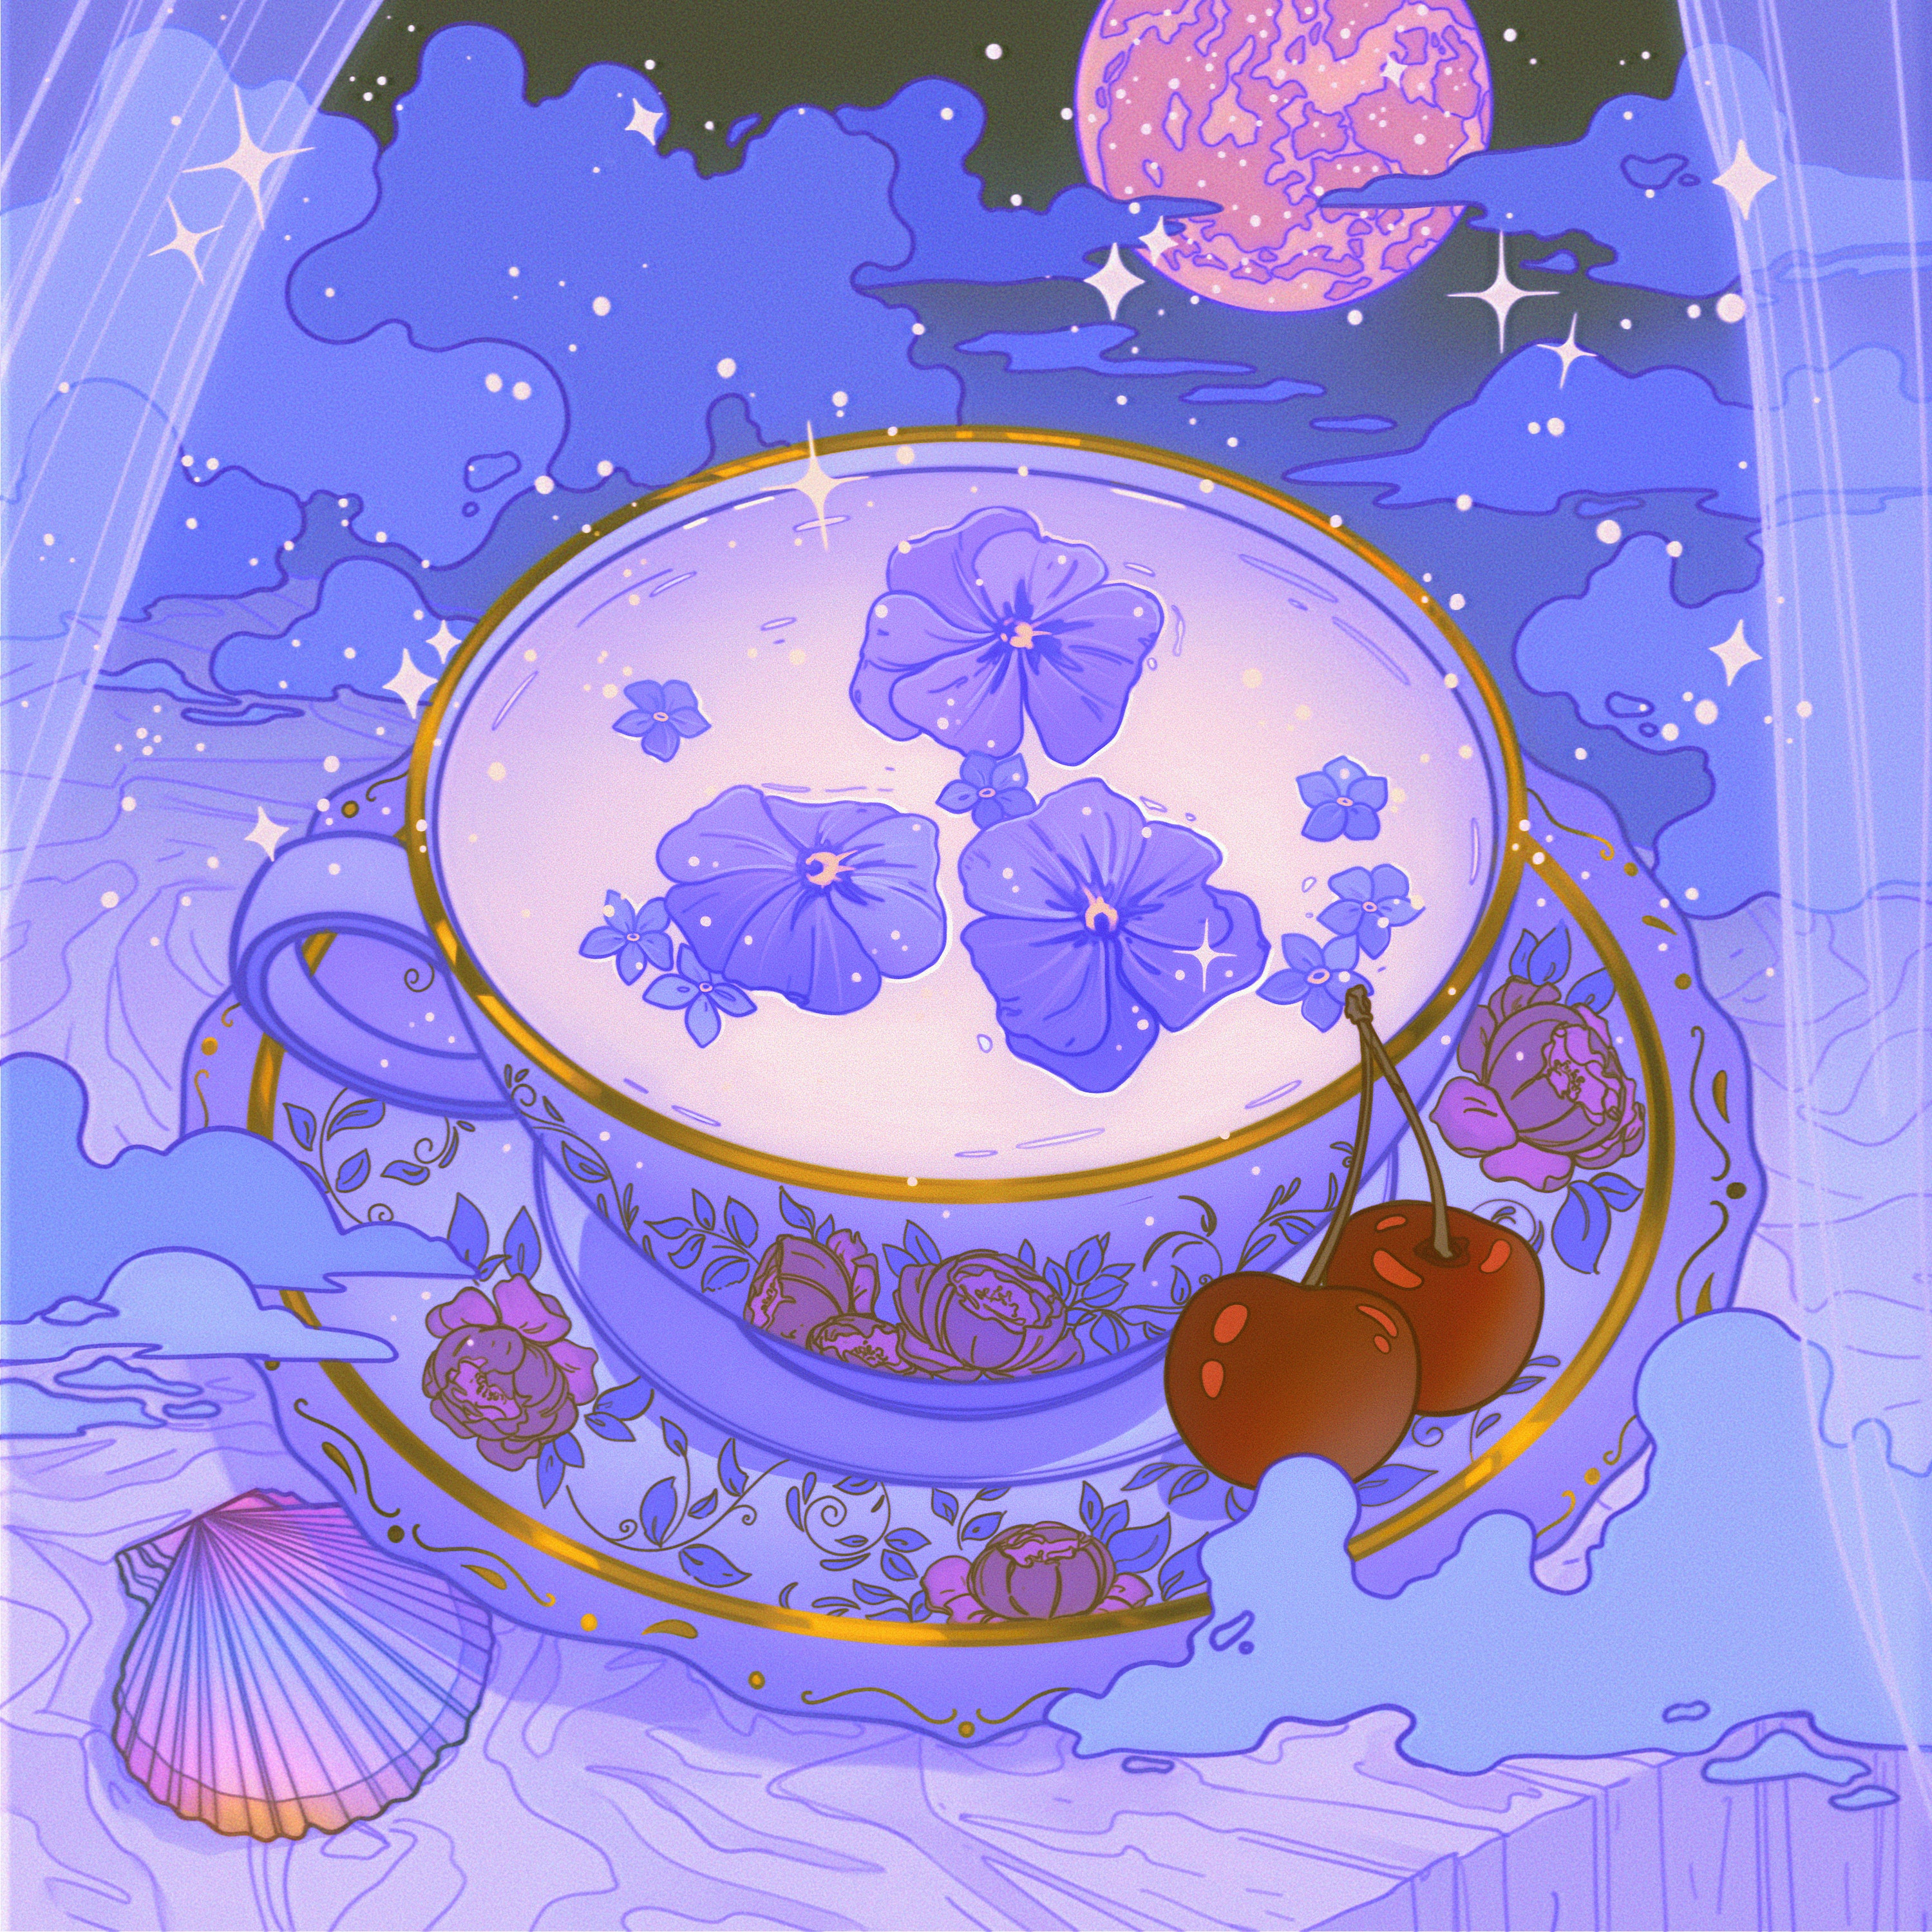 Rylen Digital Art Artwork Illustration Clouds Moon Flowers Abstract Drink Stars Cherries Fruit Cup 3000x3000